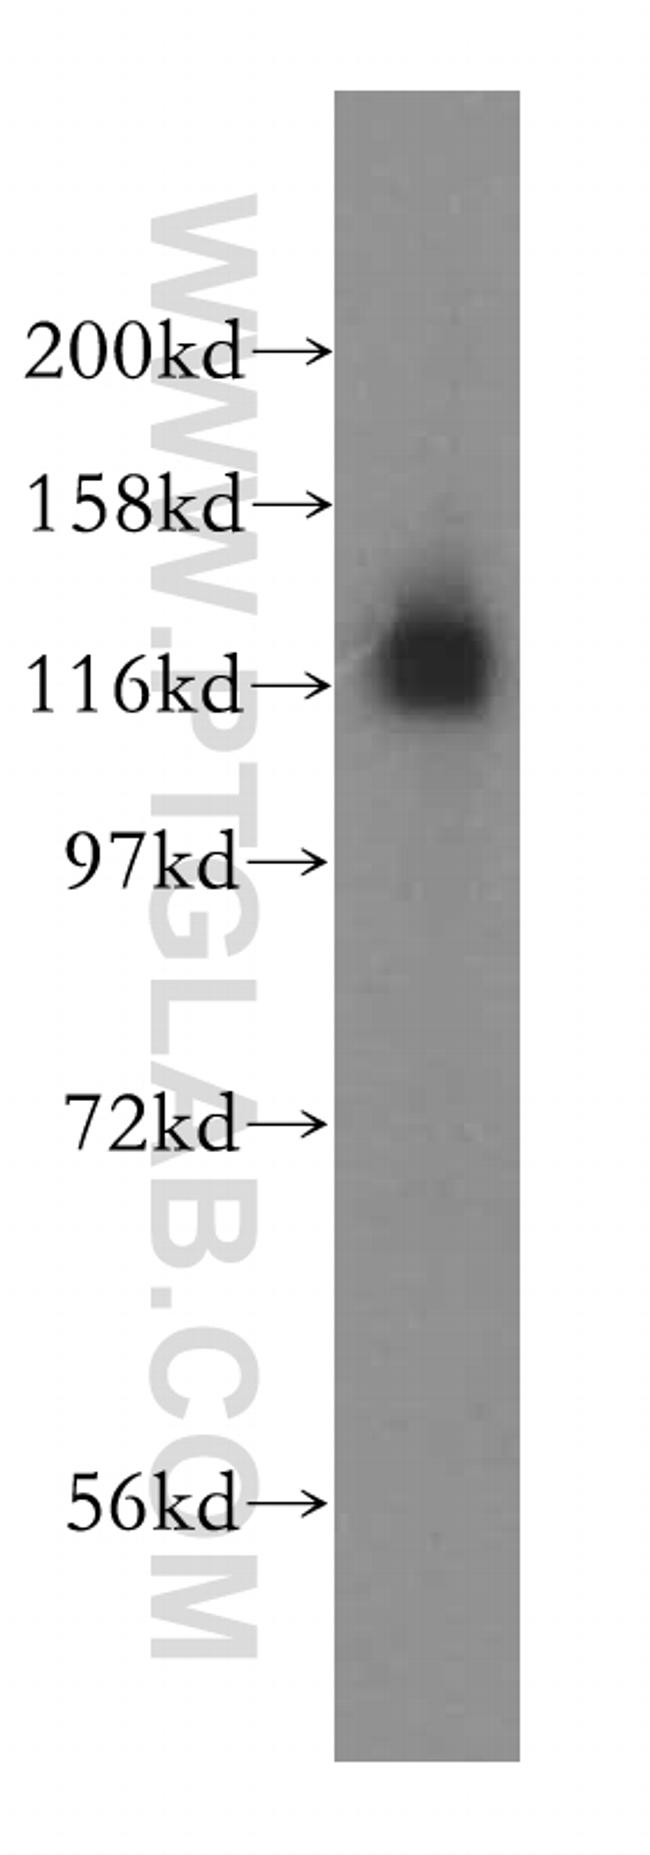 HIP1R Antibody in Western Blot (WB)